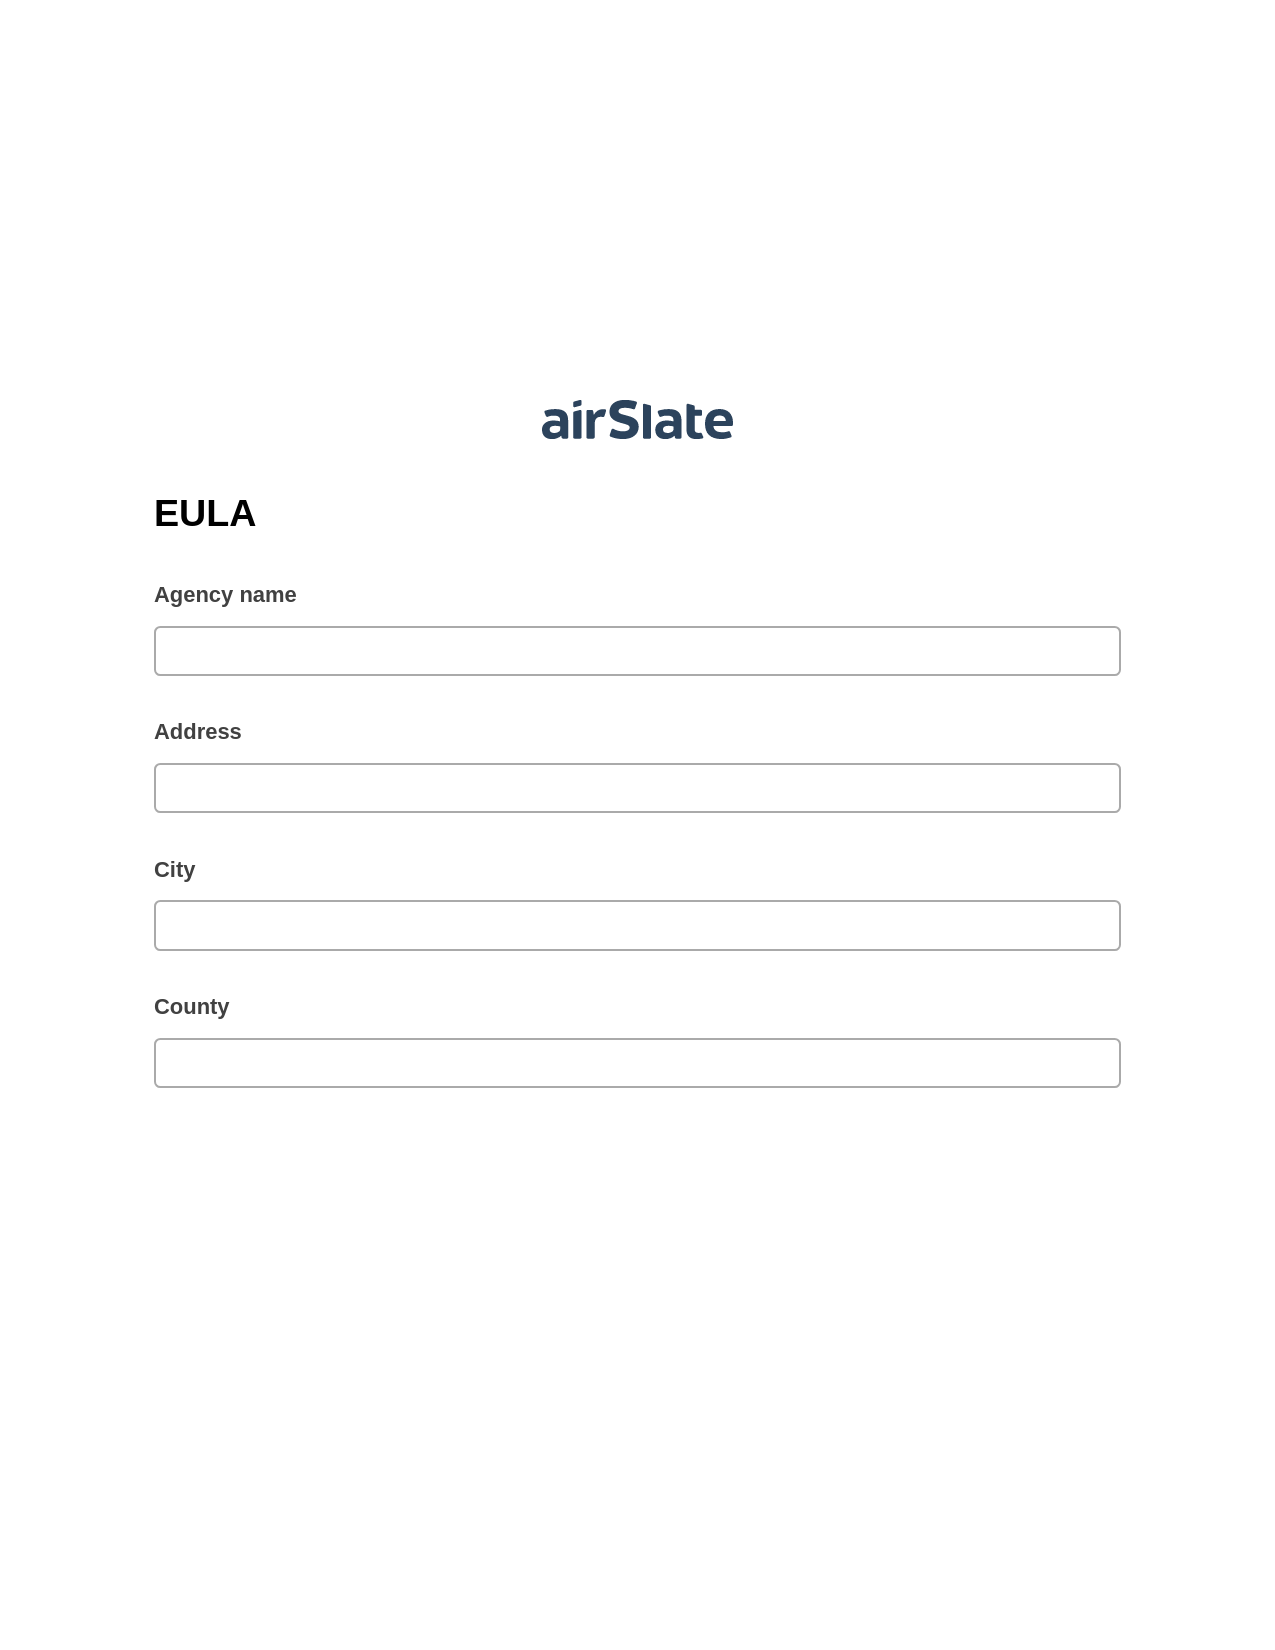 Multirole EULA Pre-fill from Google Sheet Dropdown Options Bot, Remove Slate Bot, Box Bot